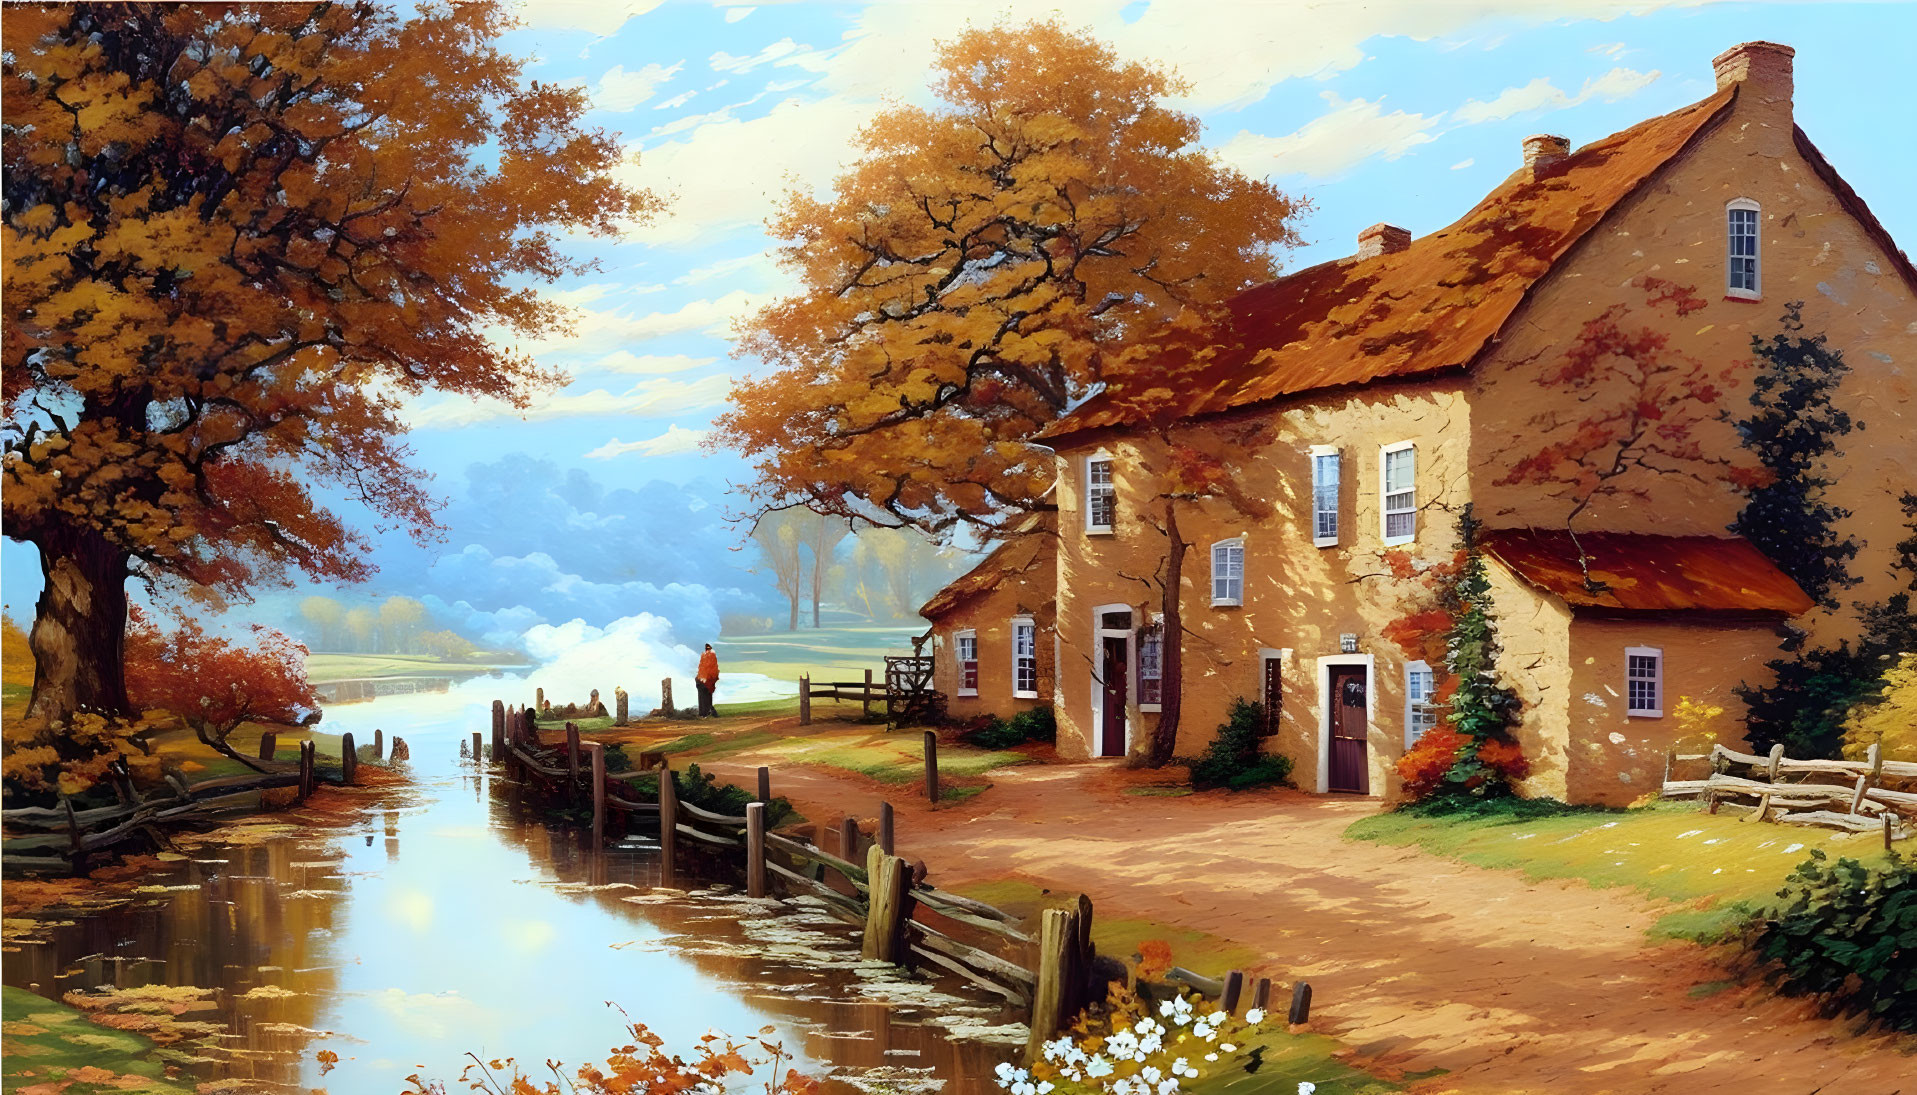 Brick cottage by reflective waterway in autumn landscape